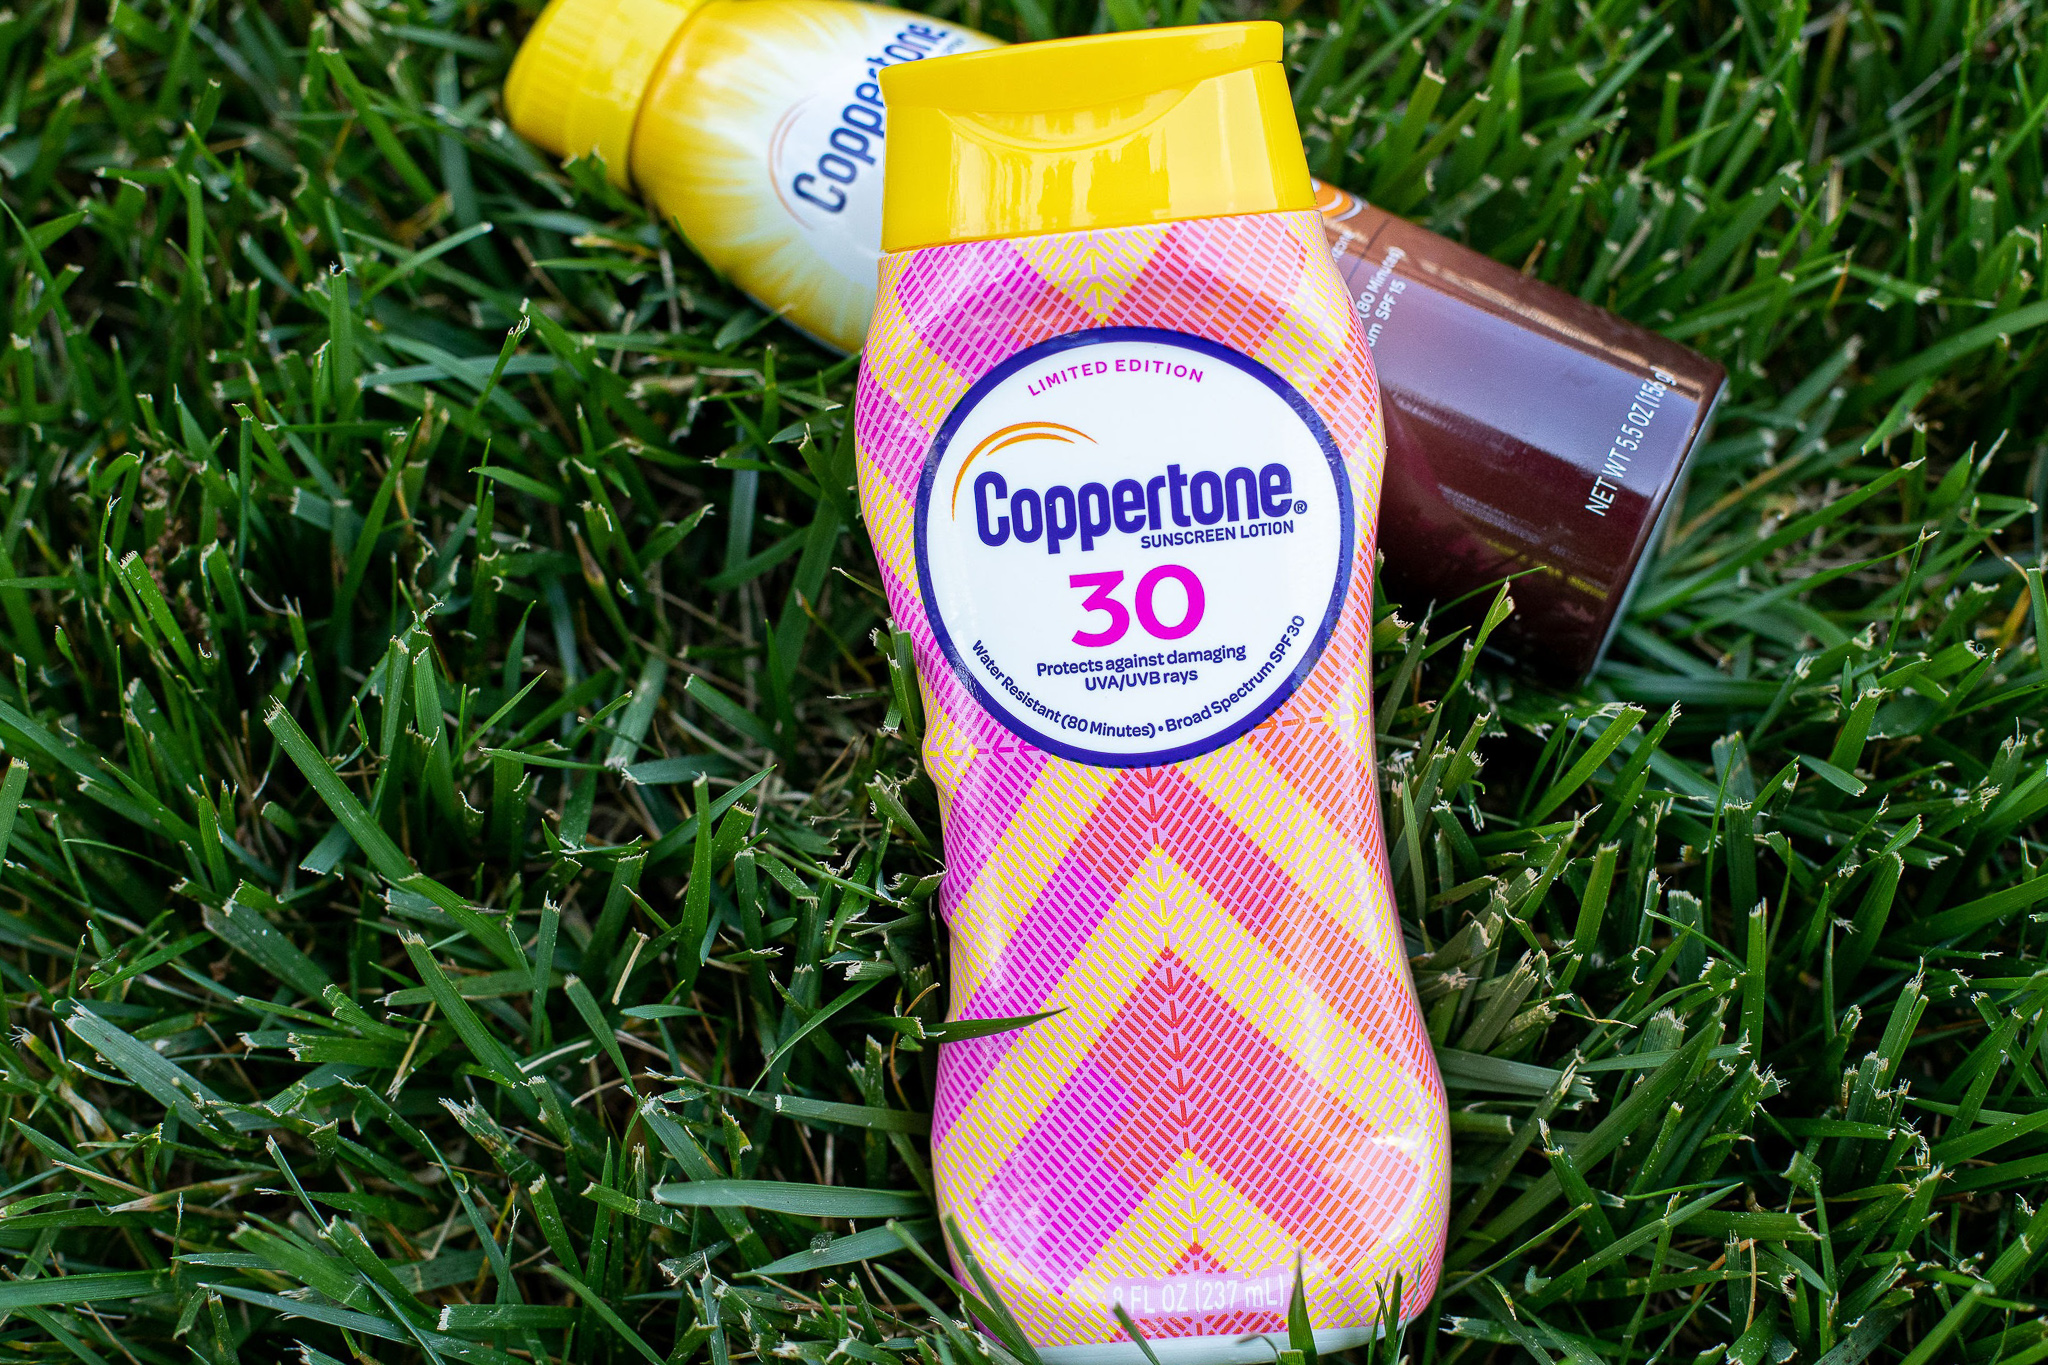 Coppertone Sunscreen As Low As $6.99 At Kroger (Regular Price $10.99)